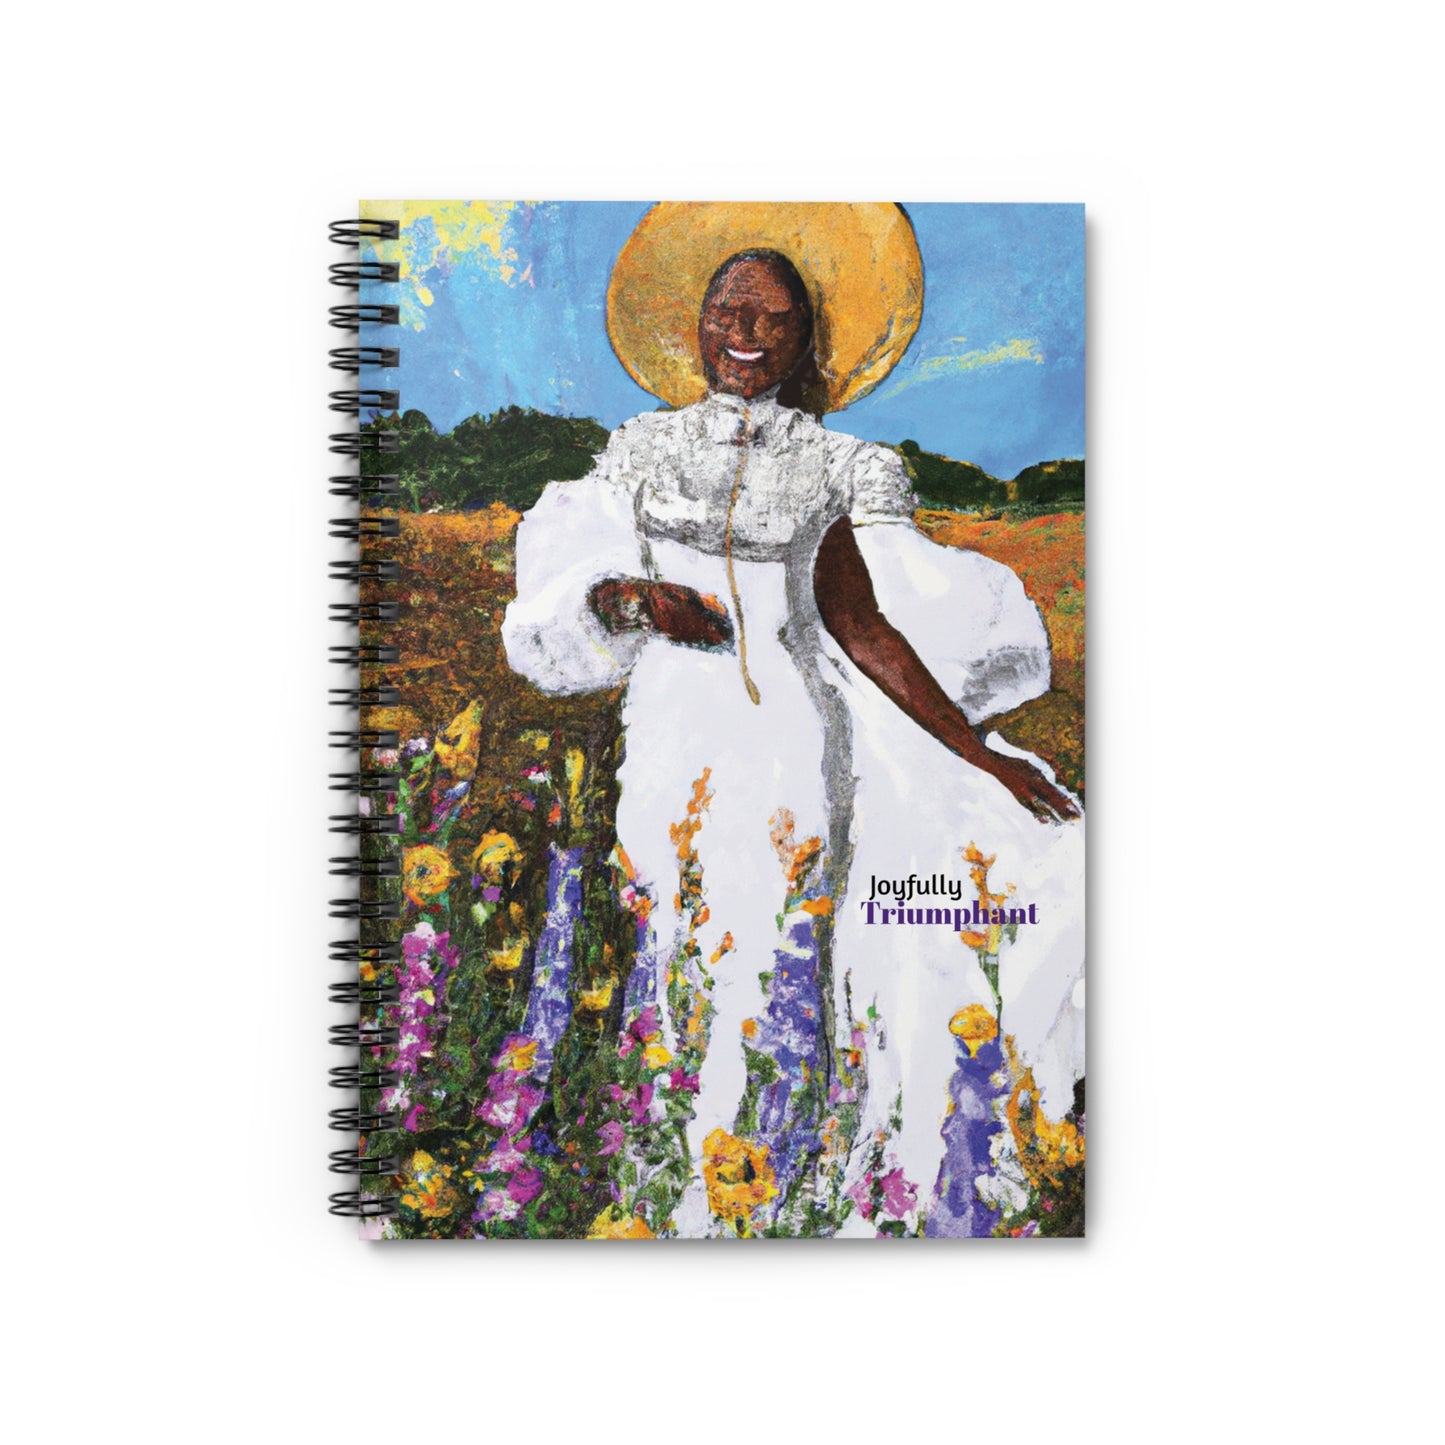 Joyfully Triumphant Journal Notebook